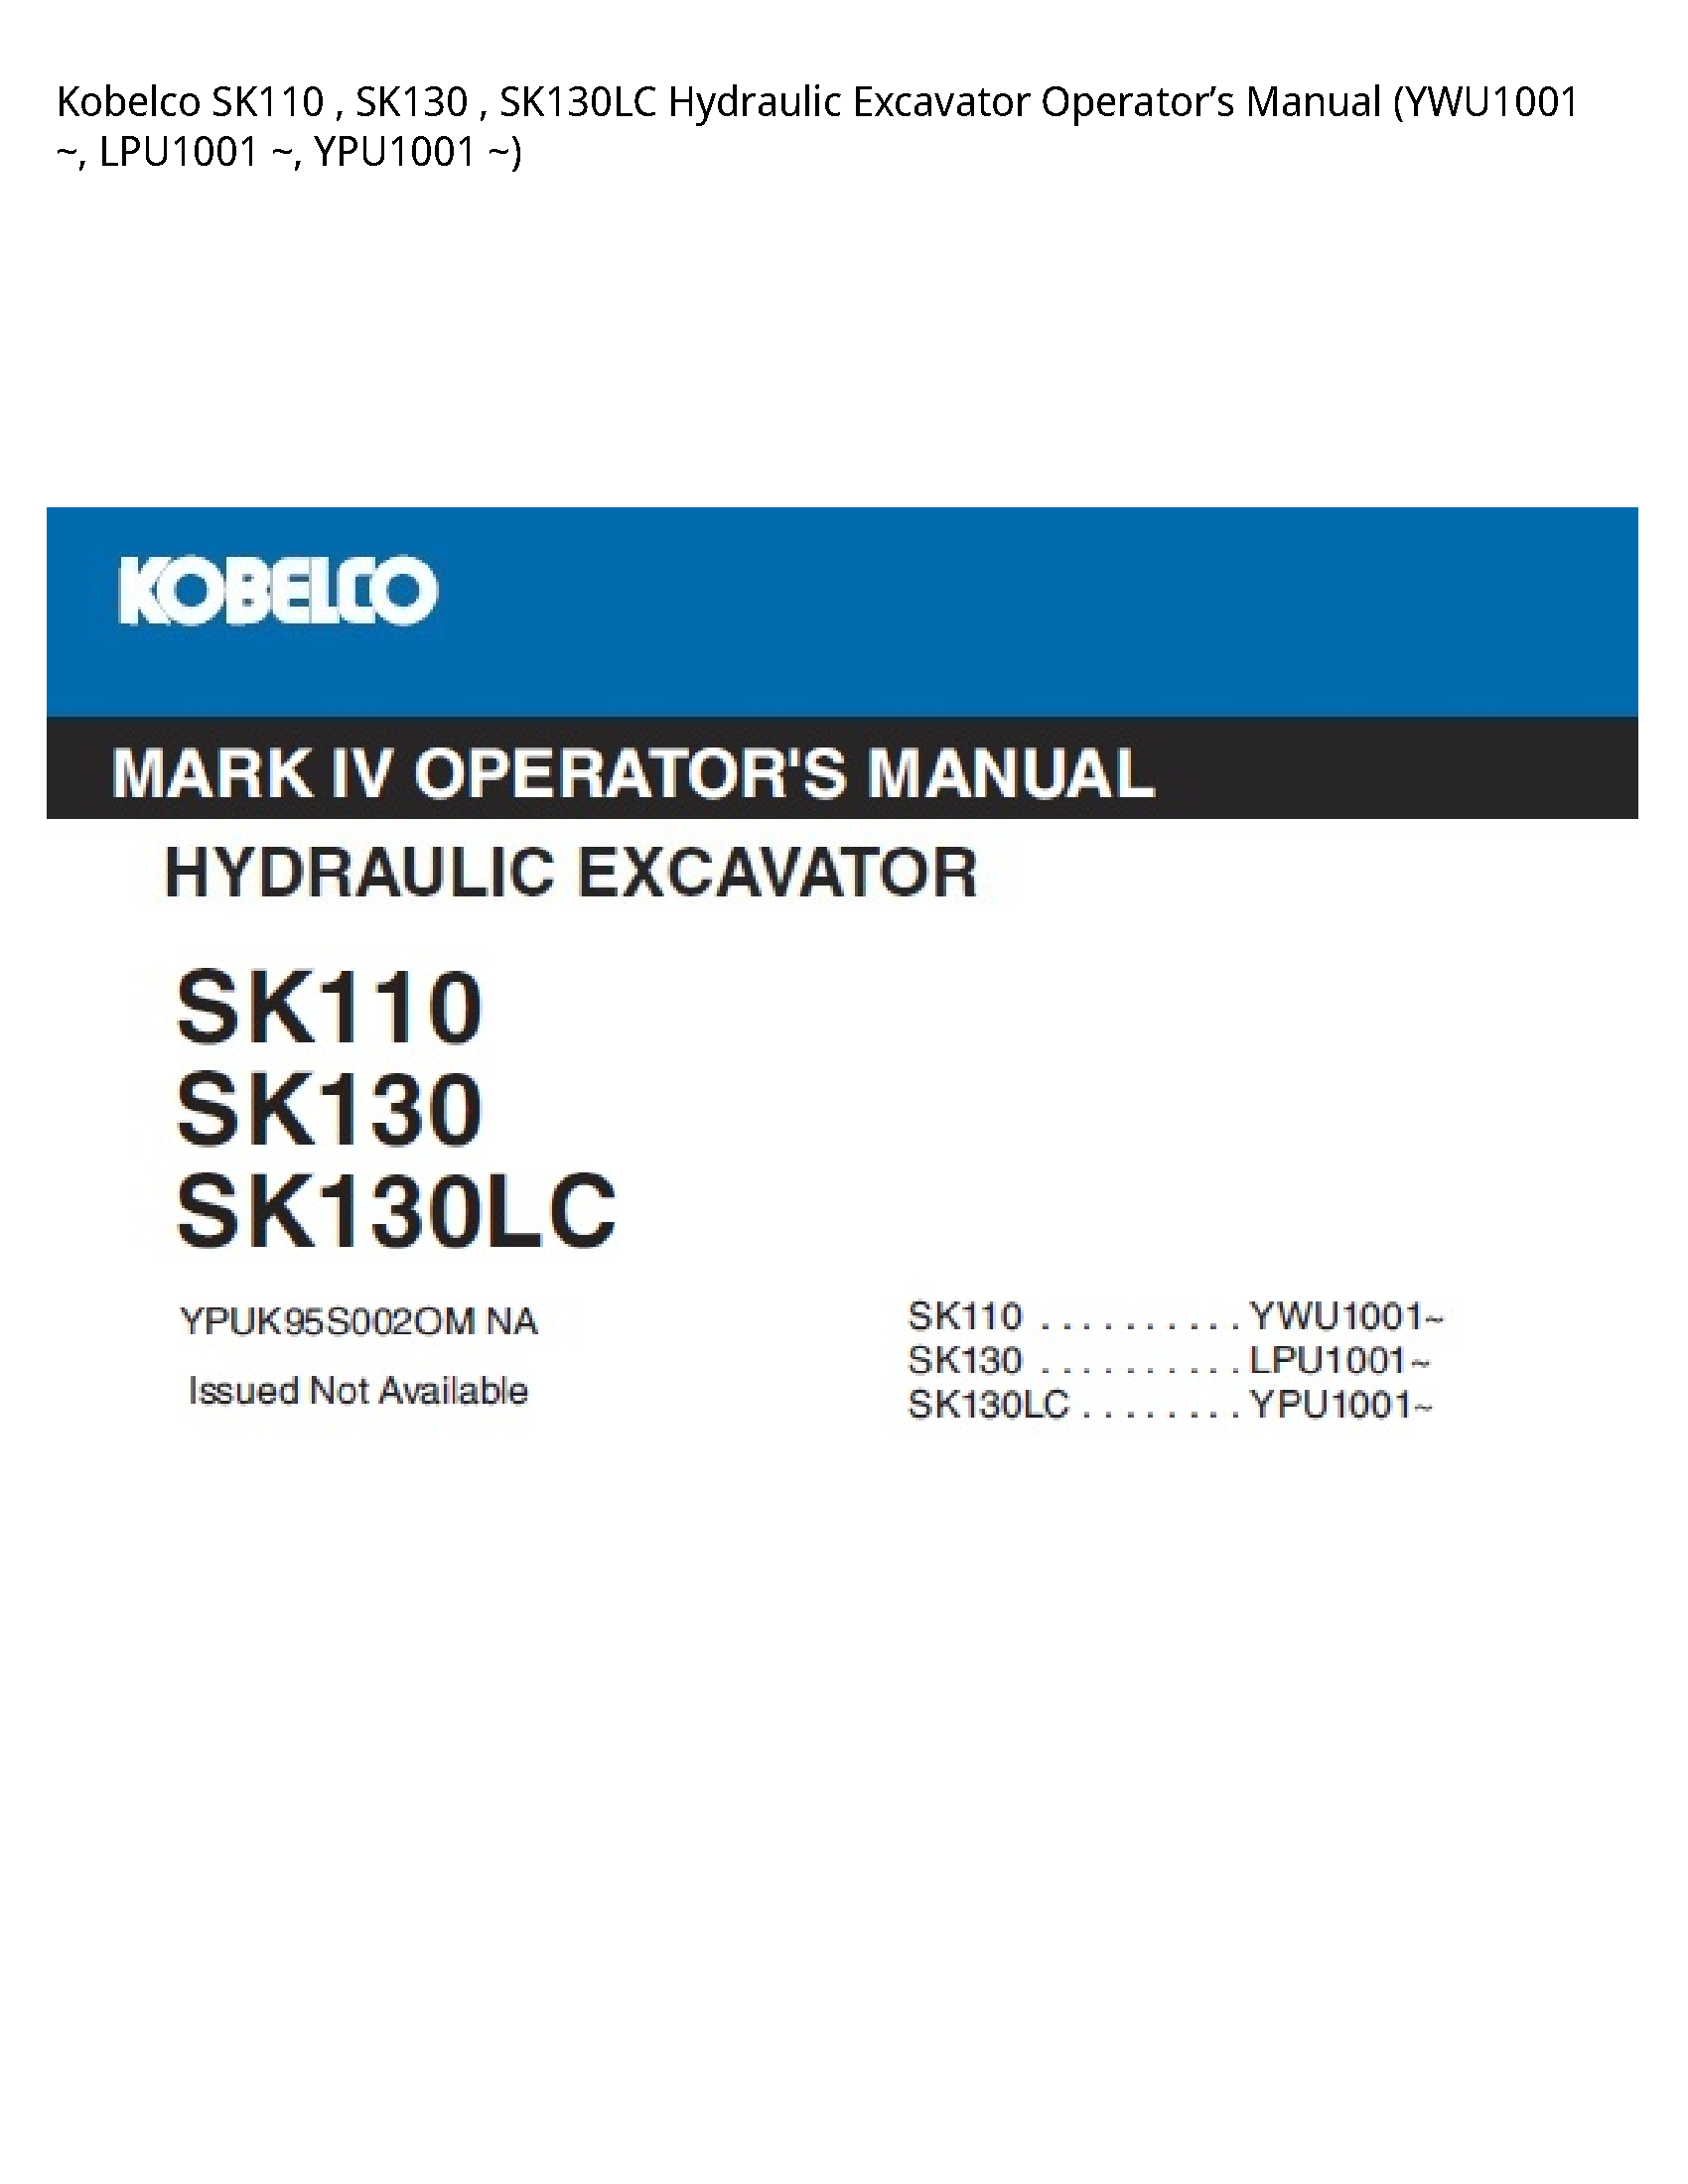 Kobelco SK110 Hydraulic Excavator Operator’s manual